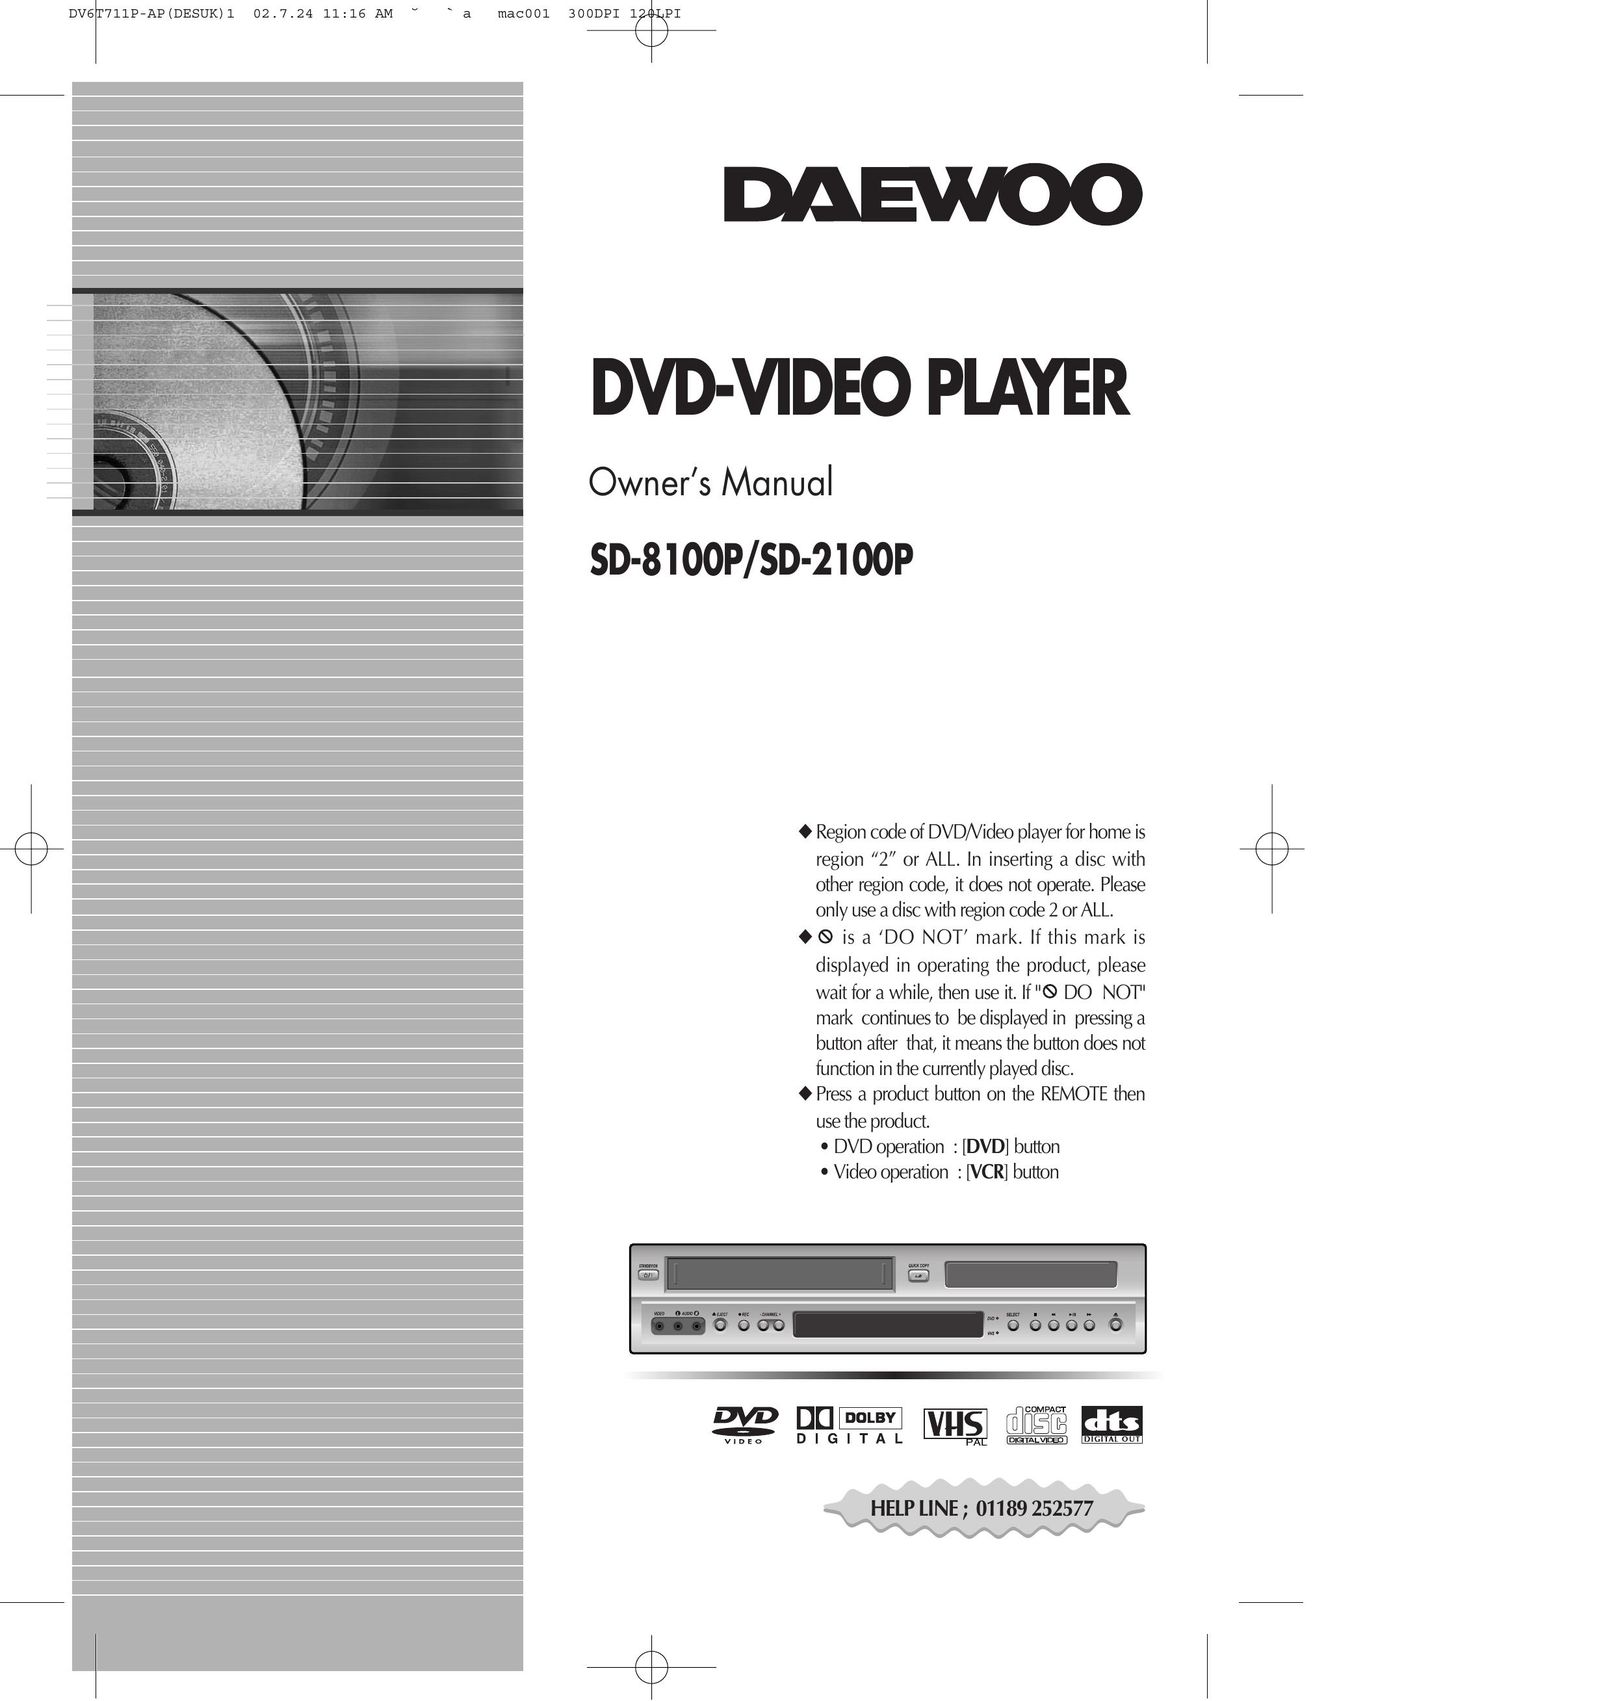 Daewoo SD-2100P DVD Player User Manual